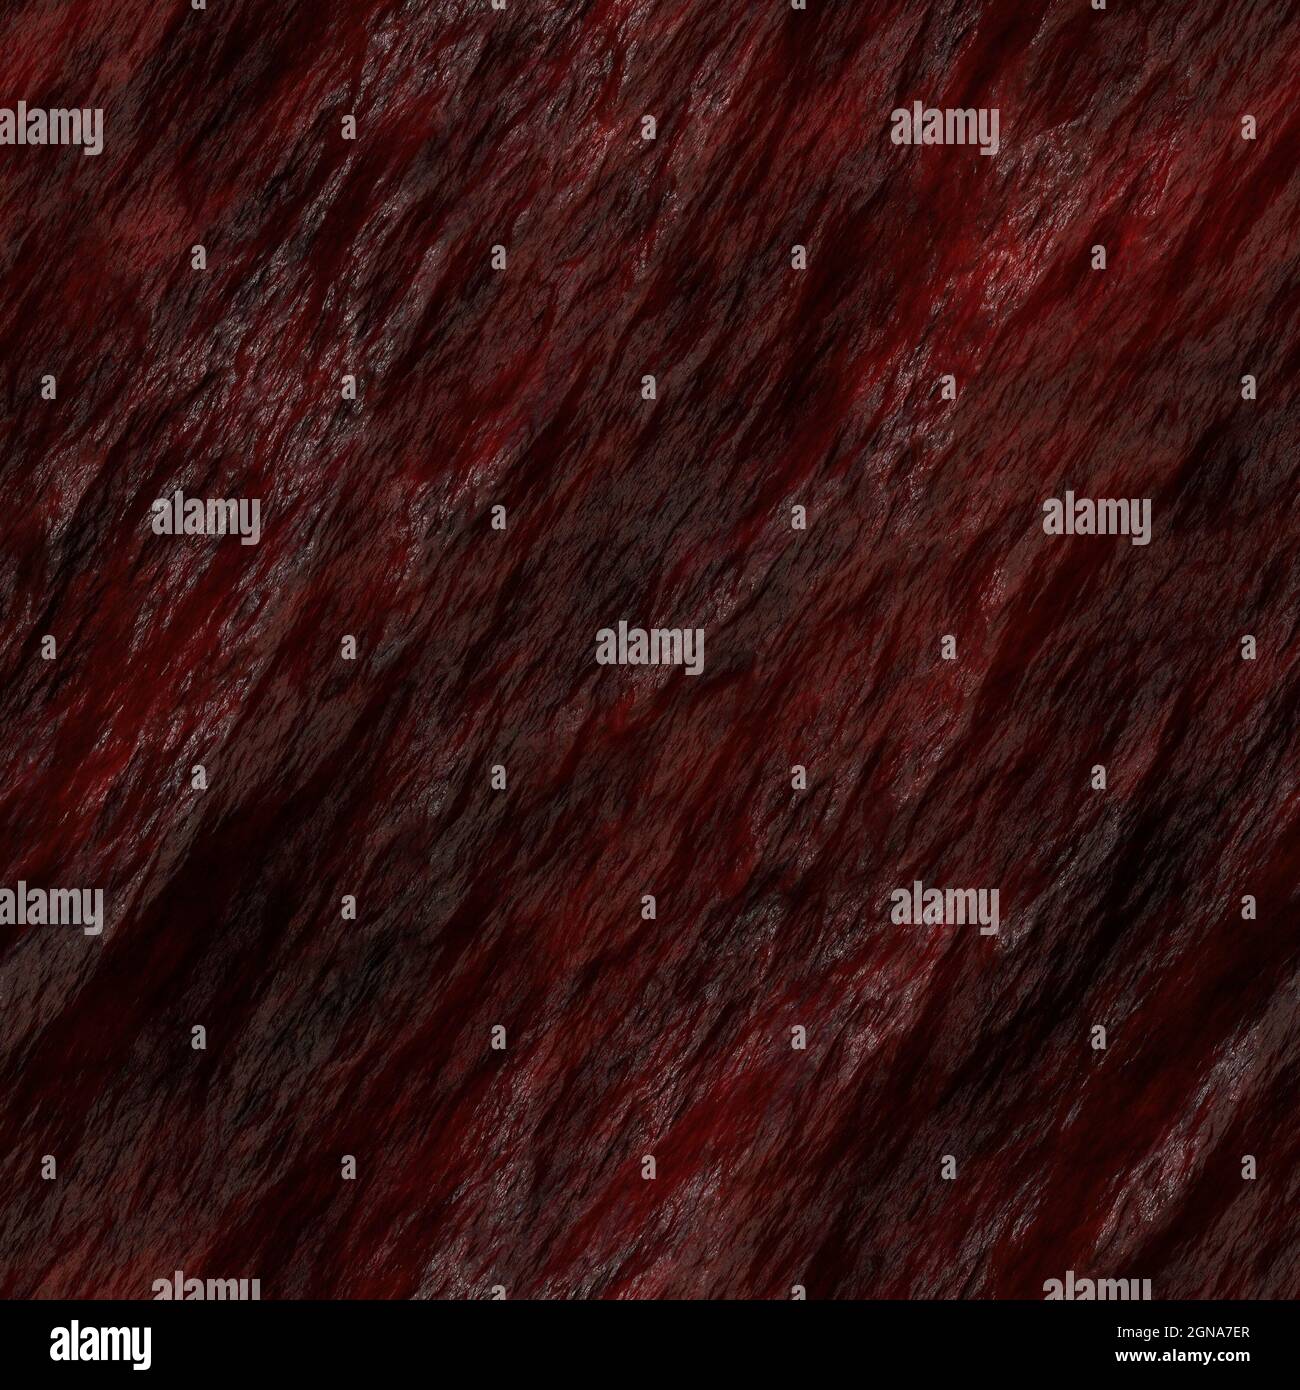 Crusty blood clot gravelly texture 3D illustration Stock Photo